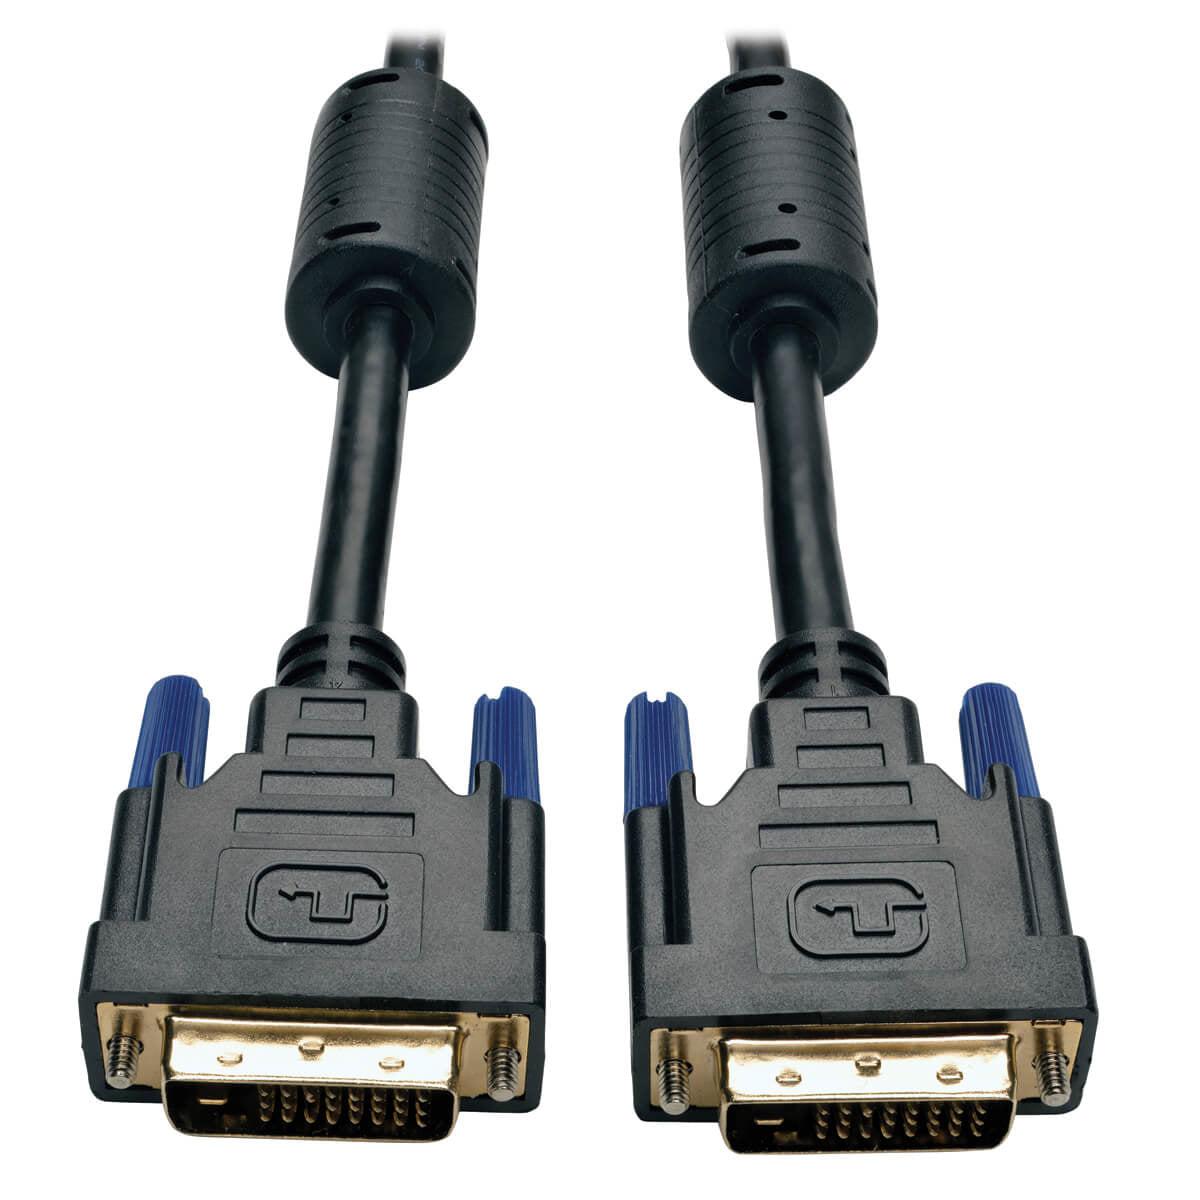 Tripp Lite P560-100-Hd Dvi High Definition Dual Link Digital Tmds Monitor Cable (Dvi-D M/M), 100 Ft. (30.5 M)